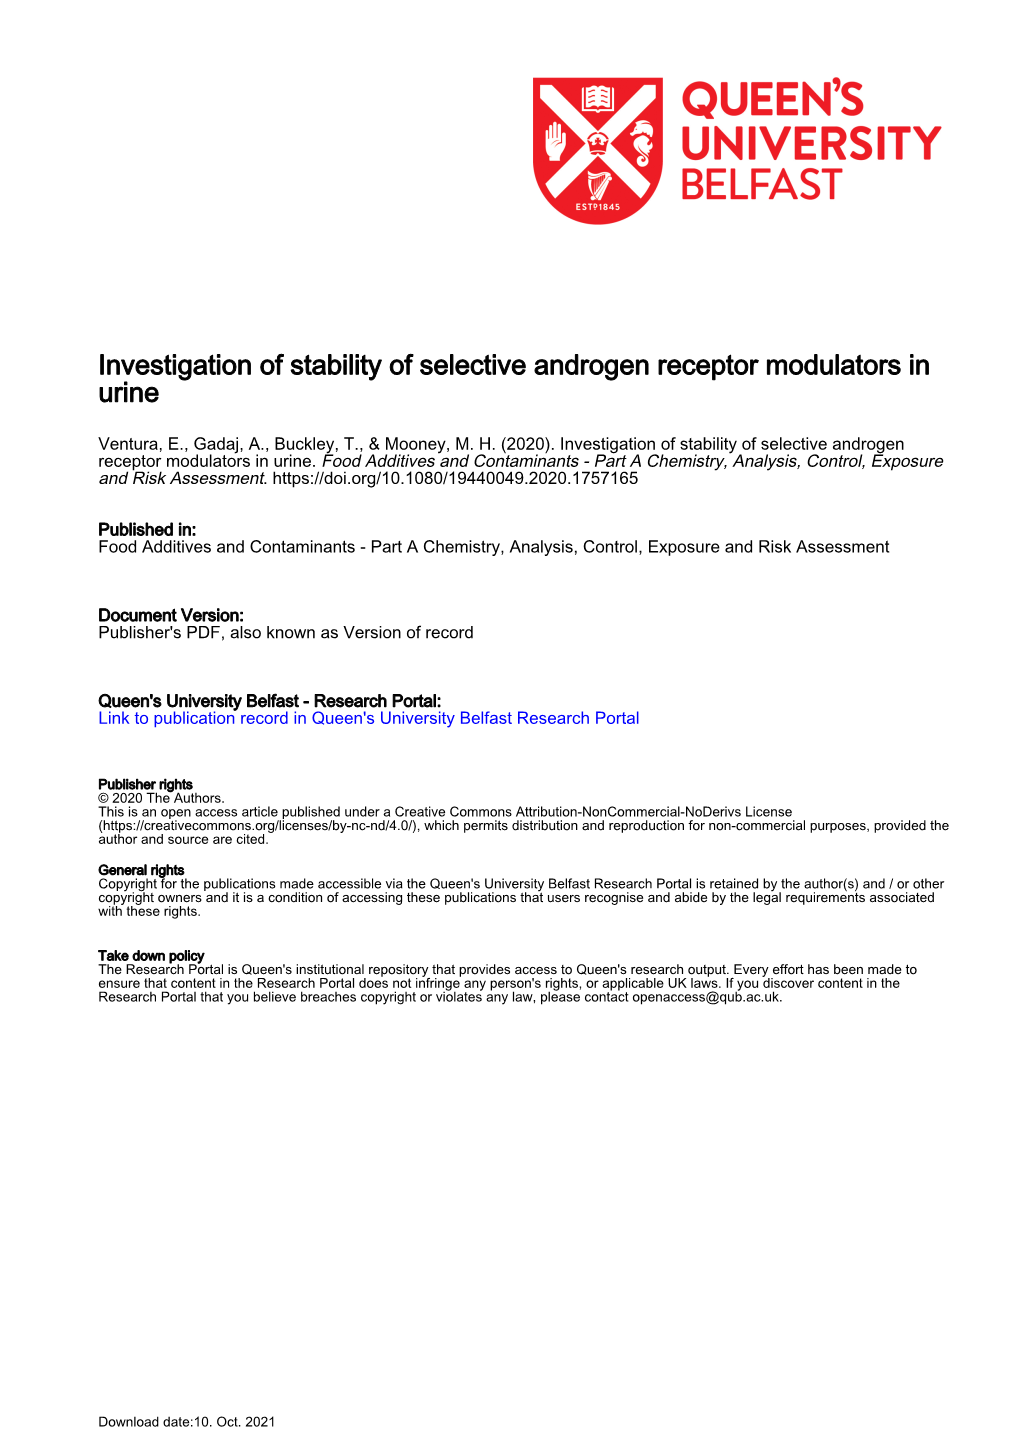 Investigation of Stability of Selective Androgen Receptor Modulators in Urine